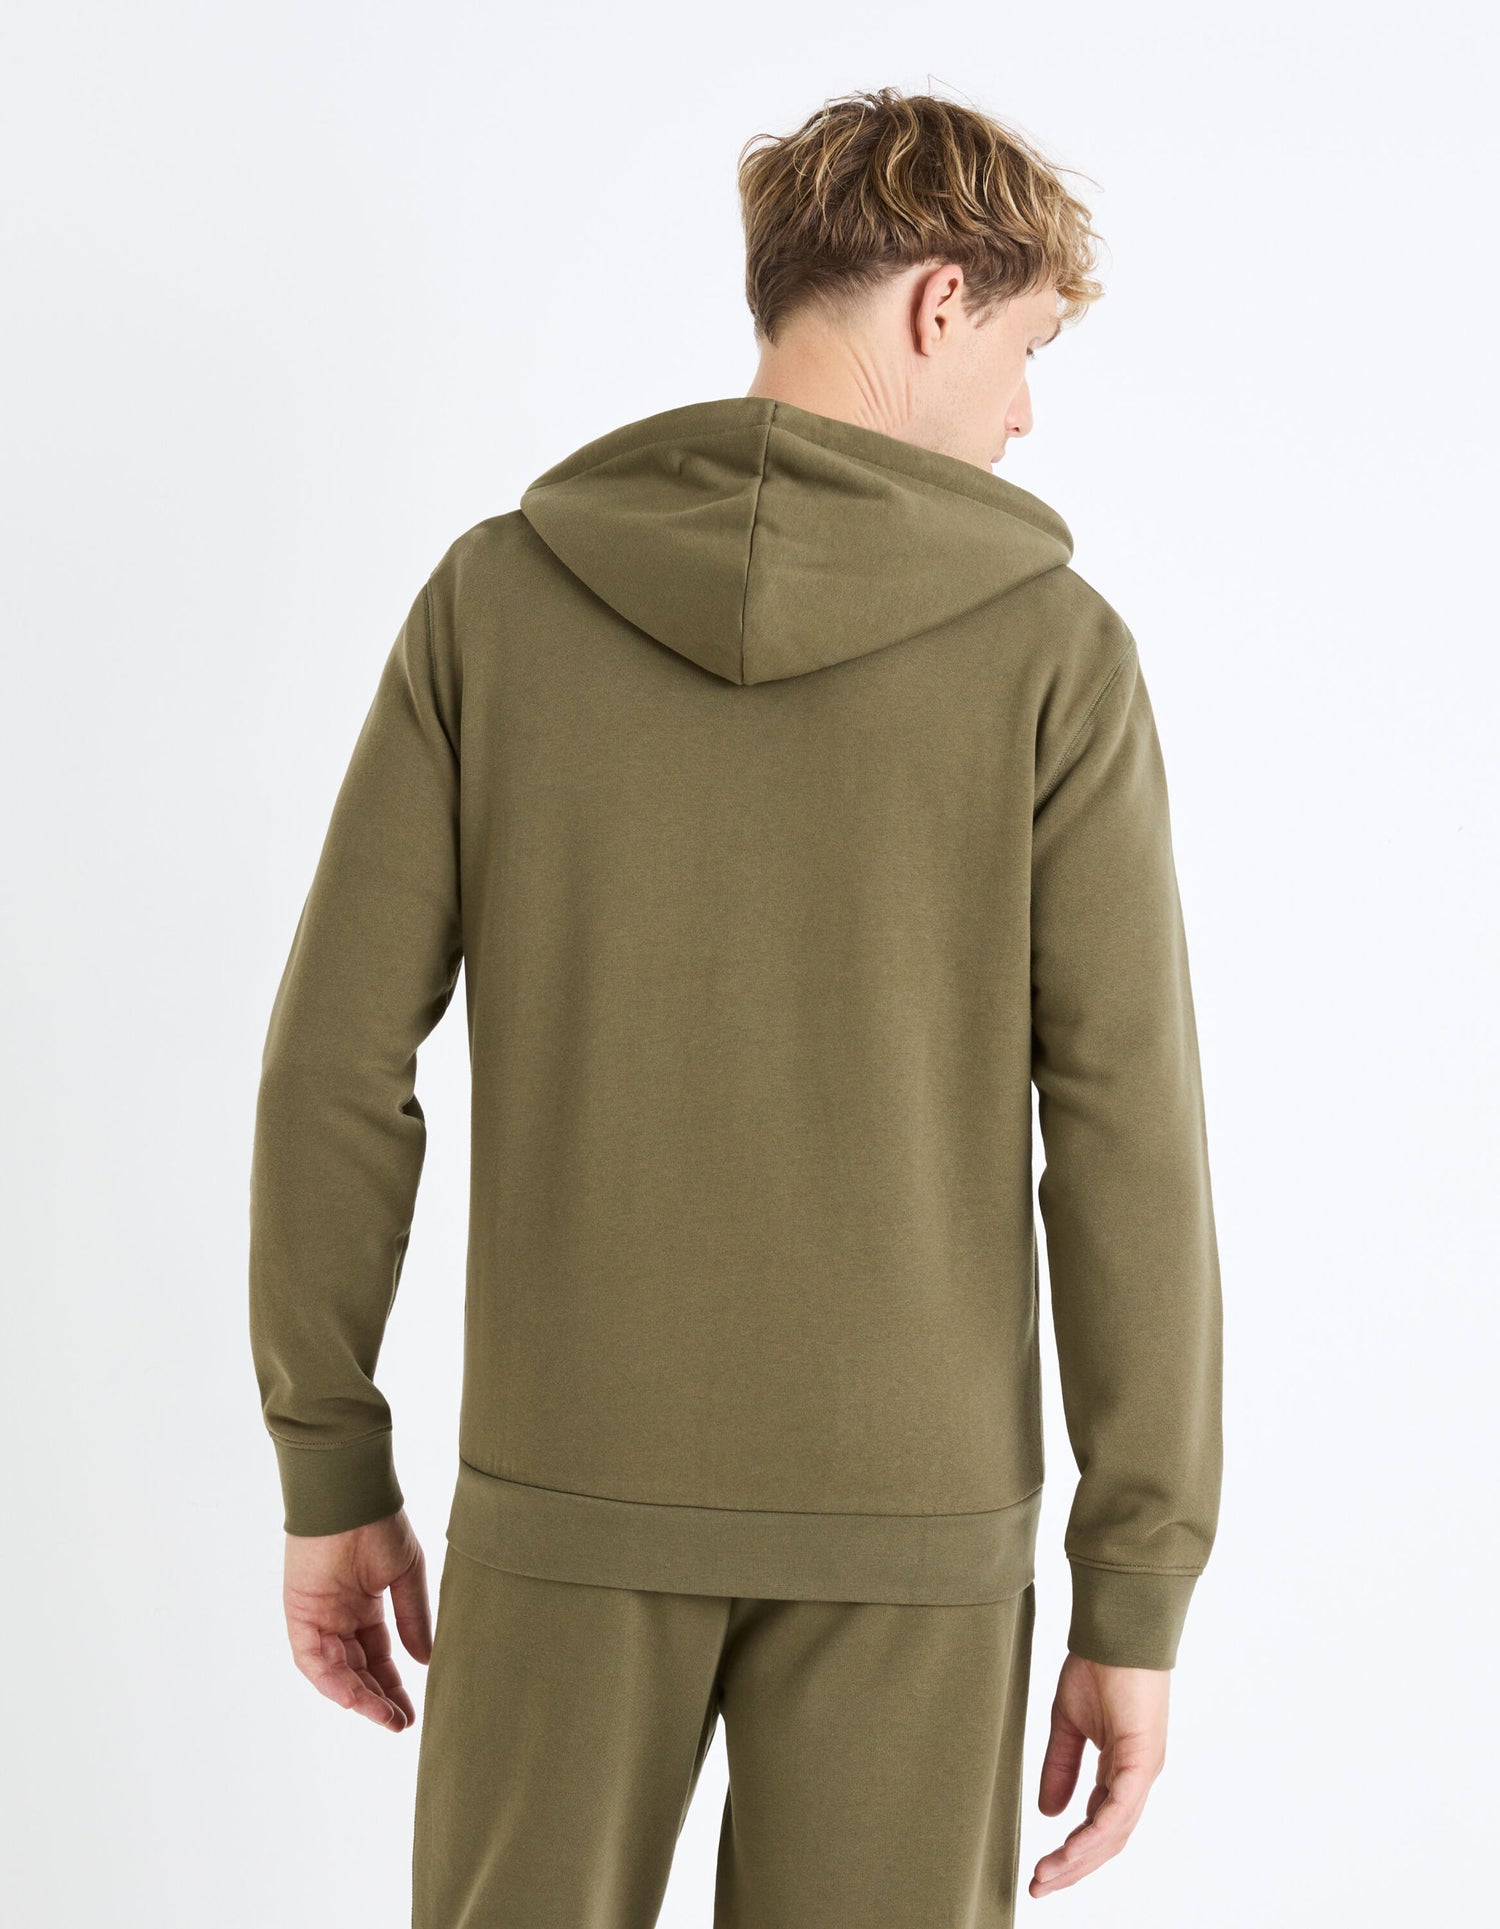 Zipped Hooded Sweatshirt 100% Cotton_FETHREE_KHAKI_04